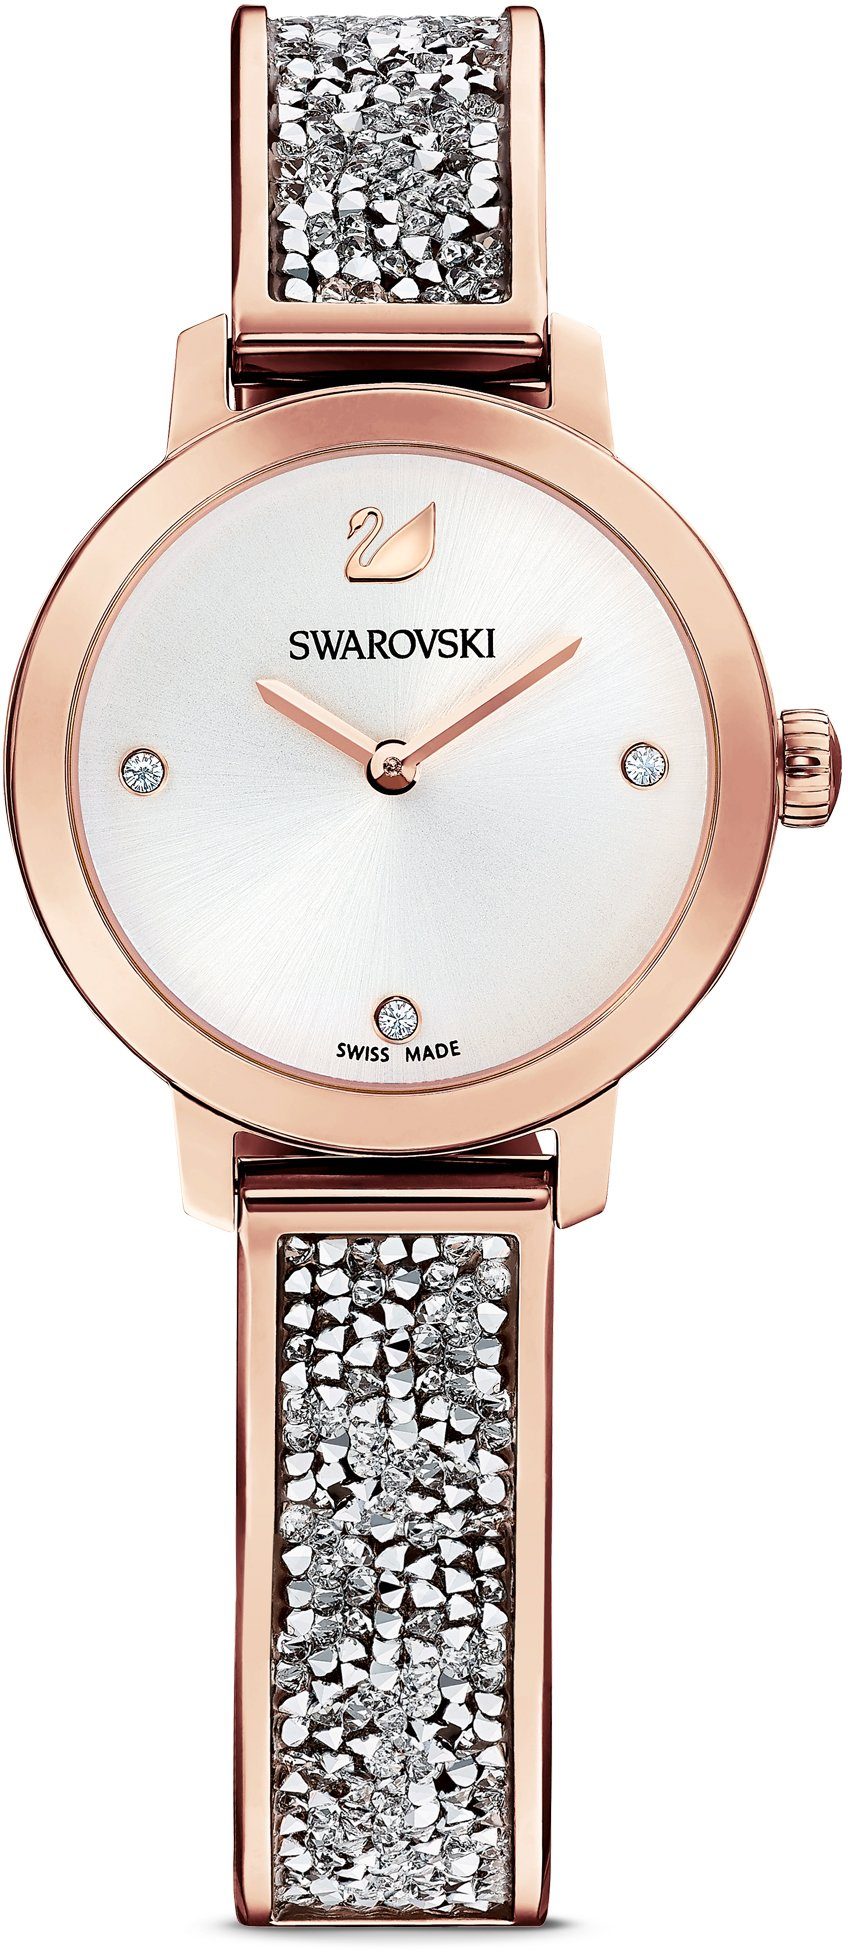 Swarovski Quarzuhr COSMIC ROCK, 5376092, Armbanduhr, Damenuhr, Swarovski-Kristalle, Swiss Made